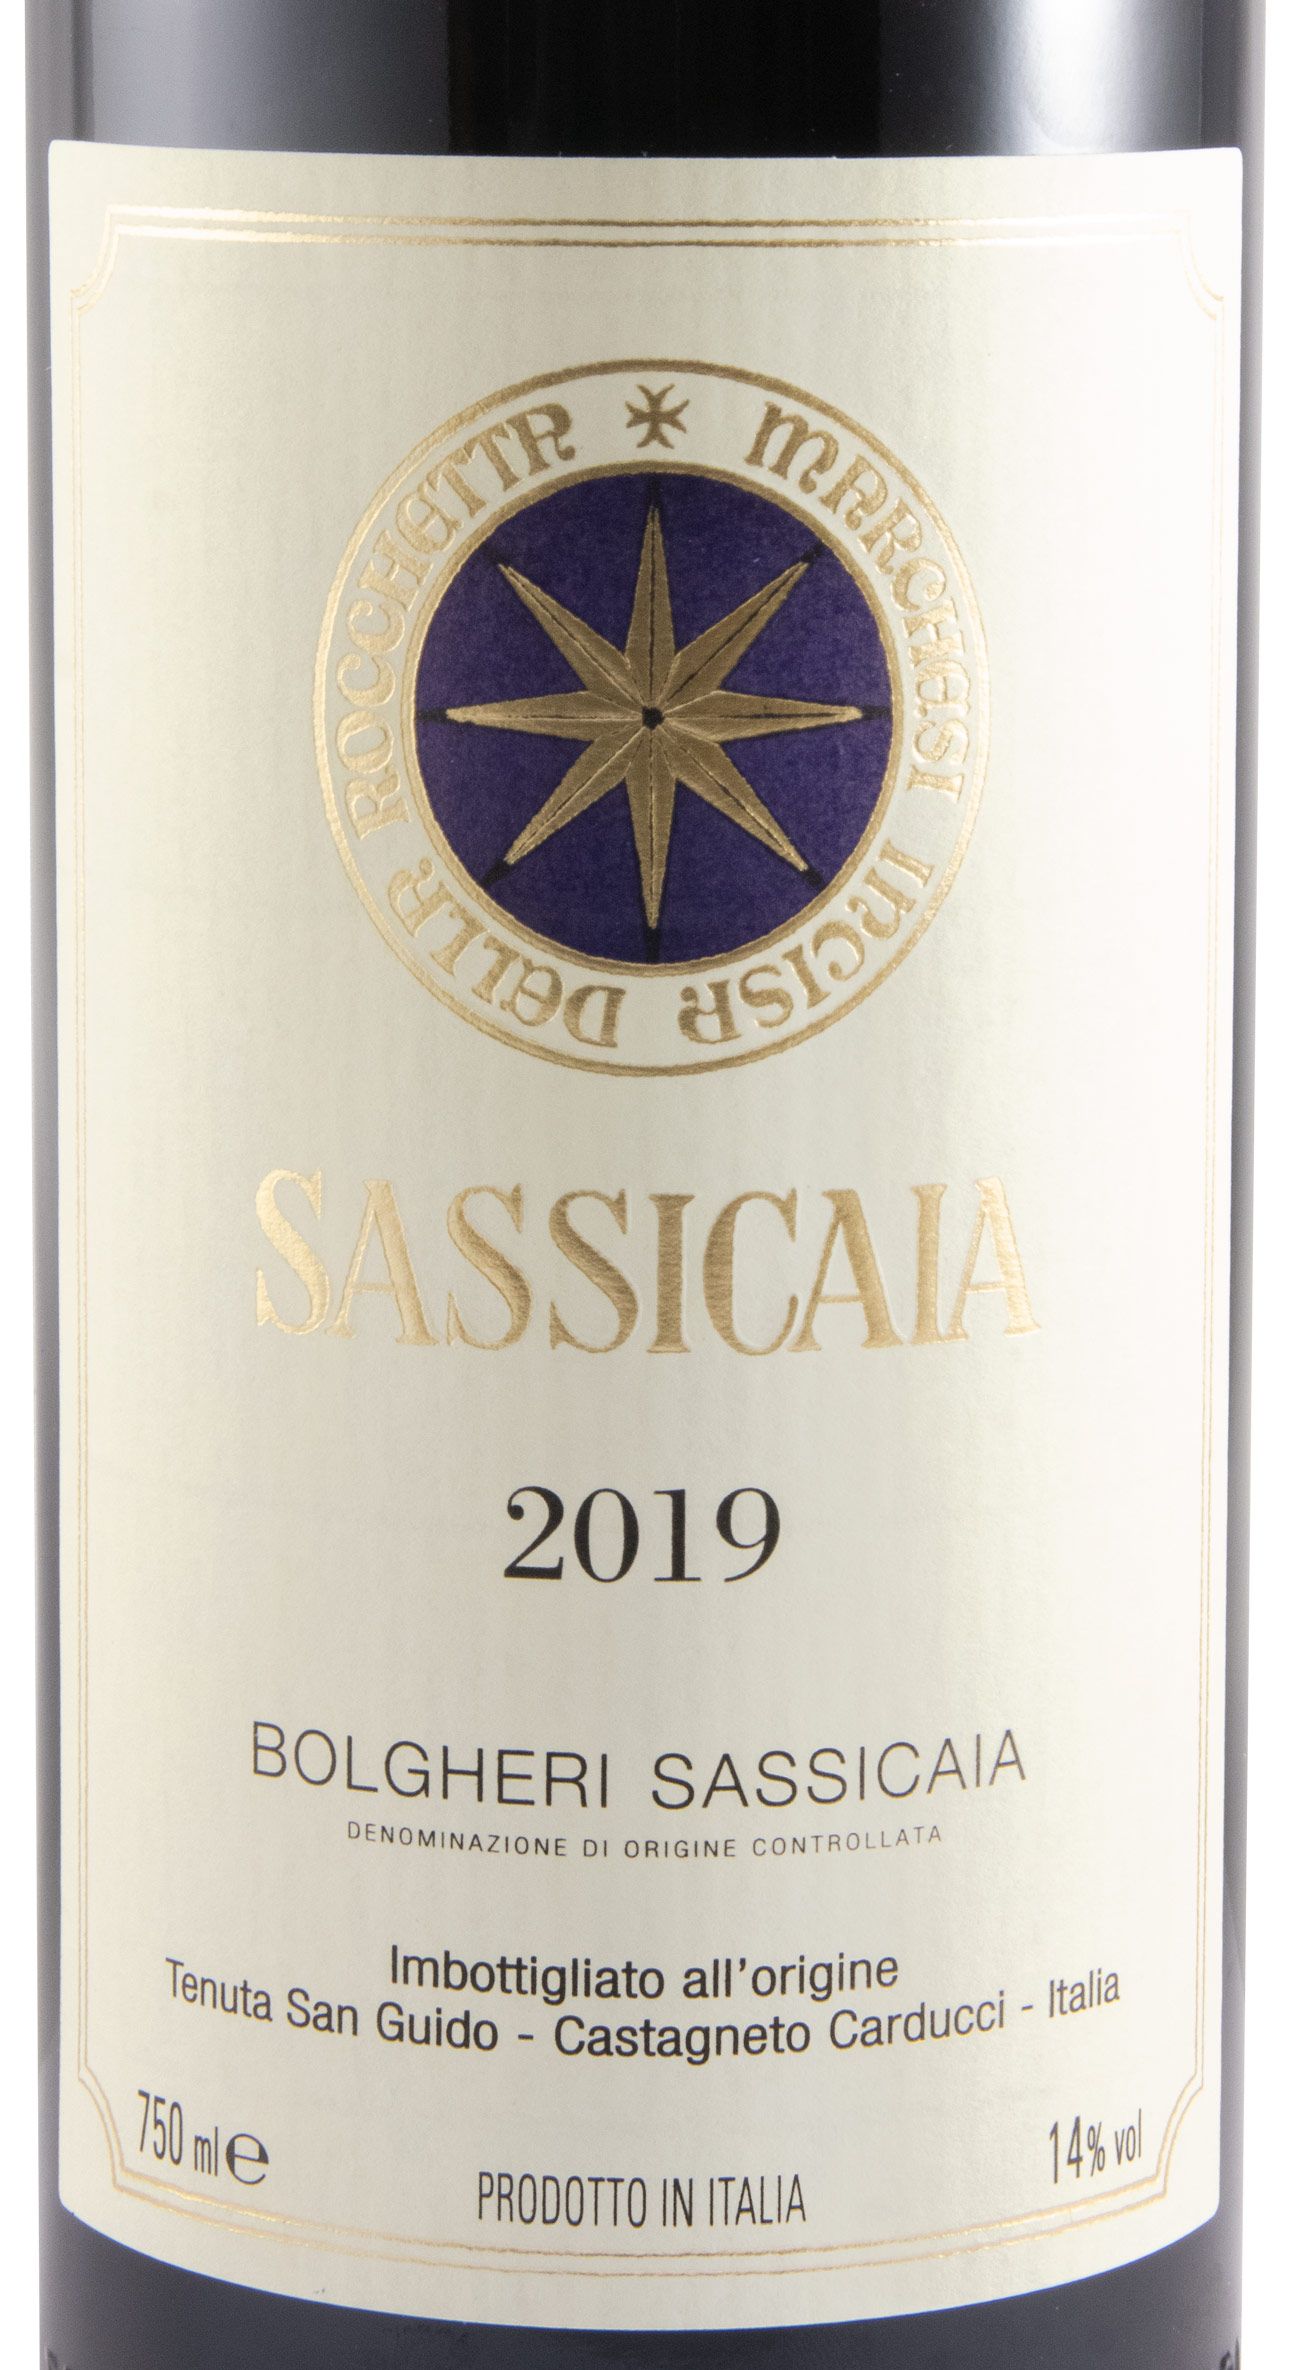 2019 Tenuta San Guido Sassicaia Bolgheri tinto